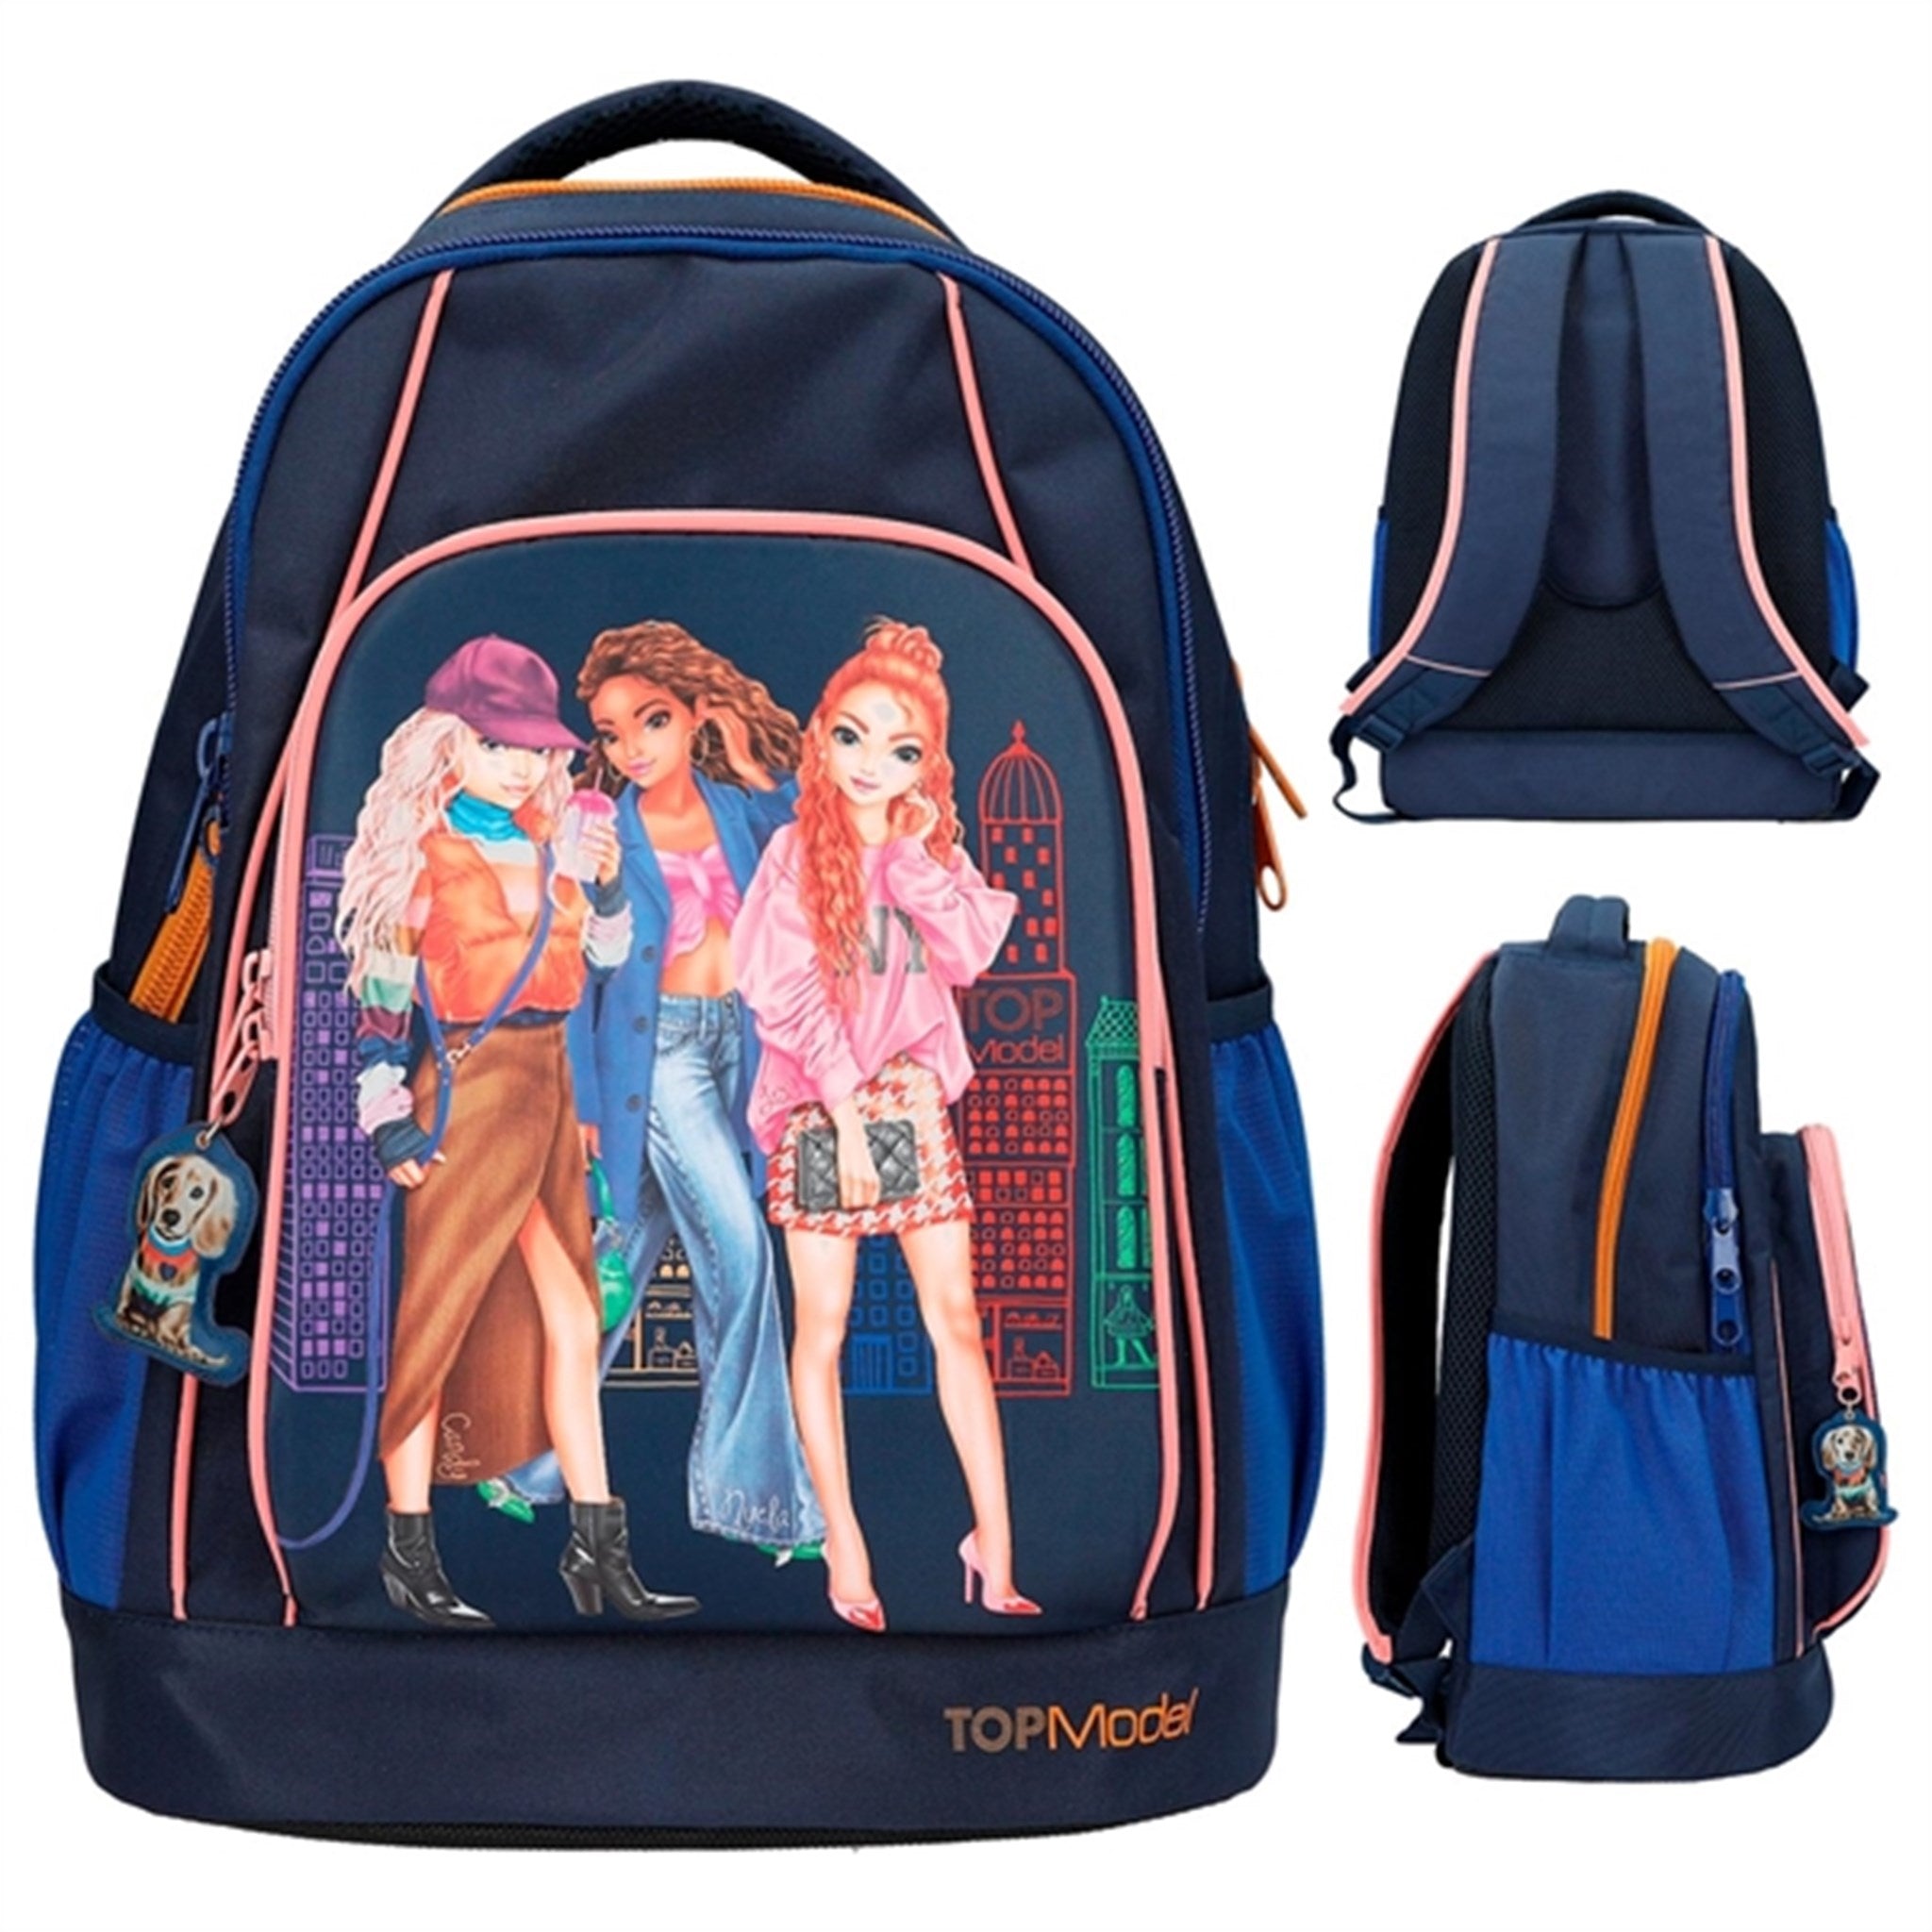 TOPModel Backpack City Girls